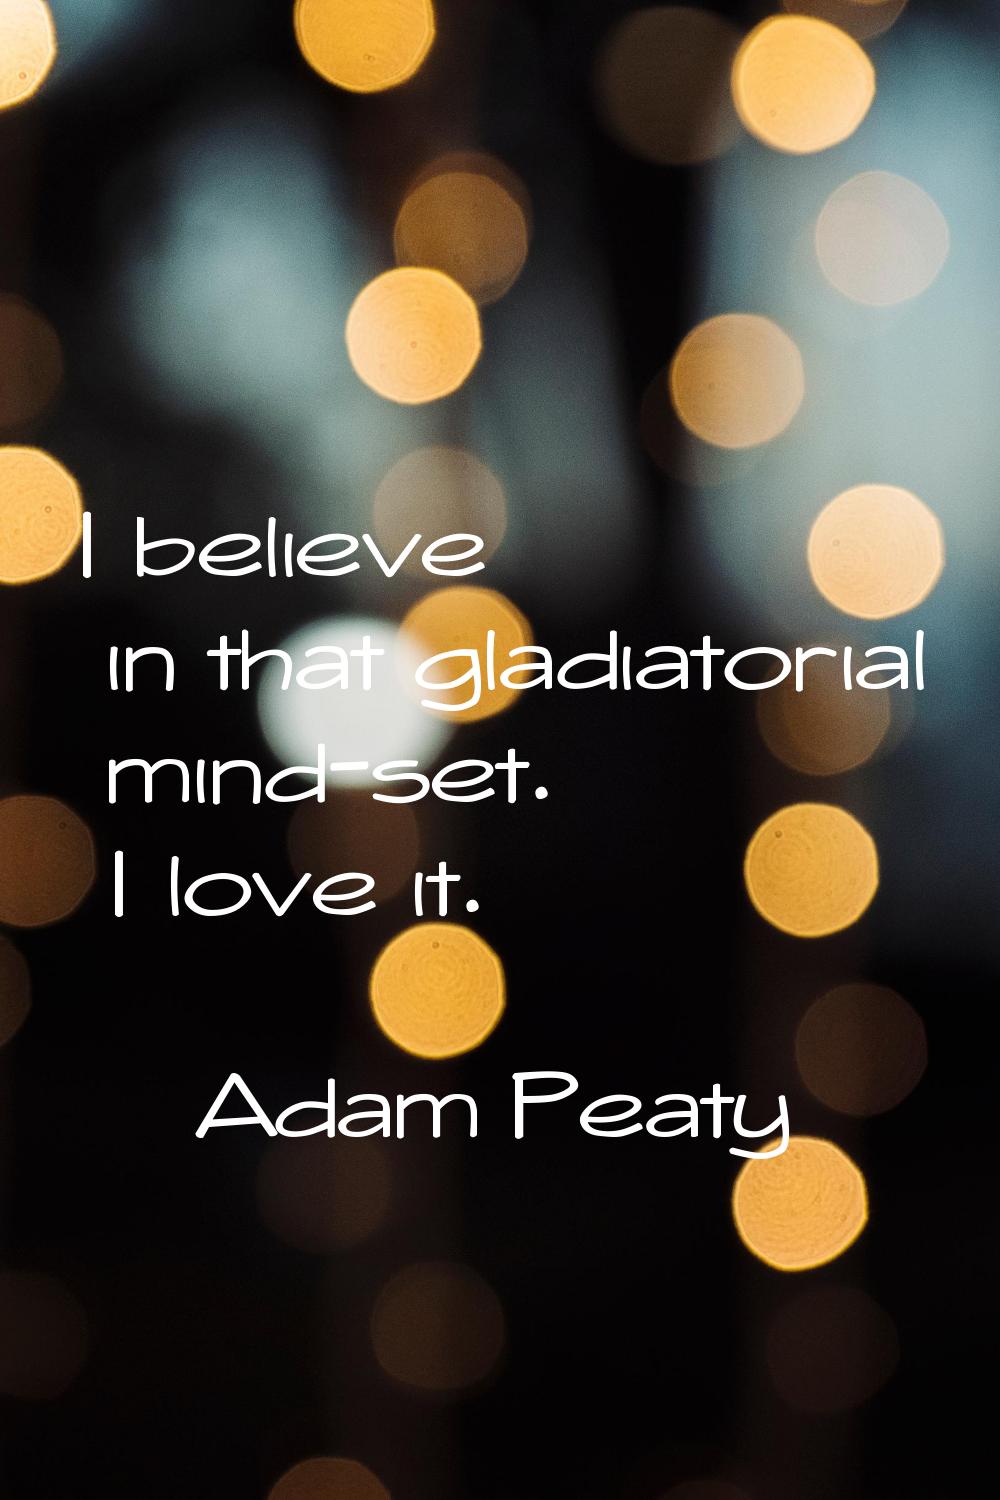 I believe in that gladiatorial mind-set. I love it.